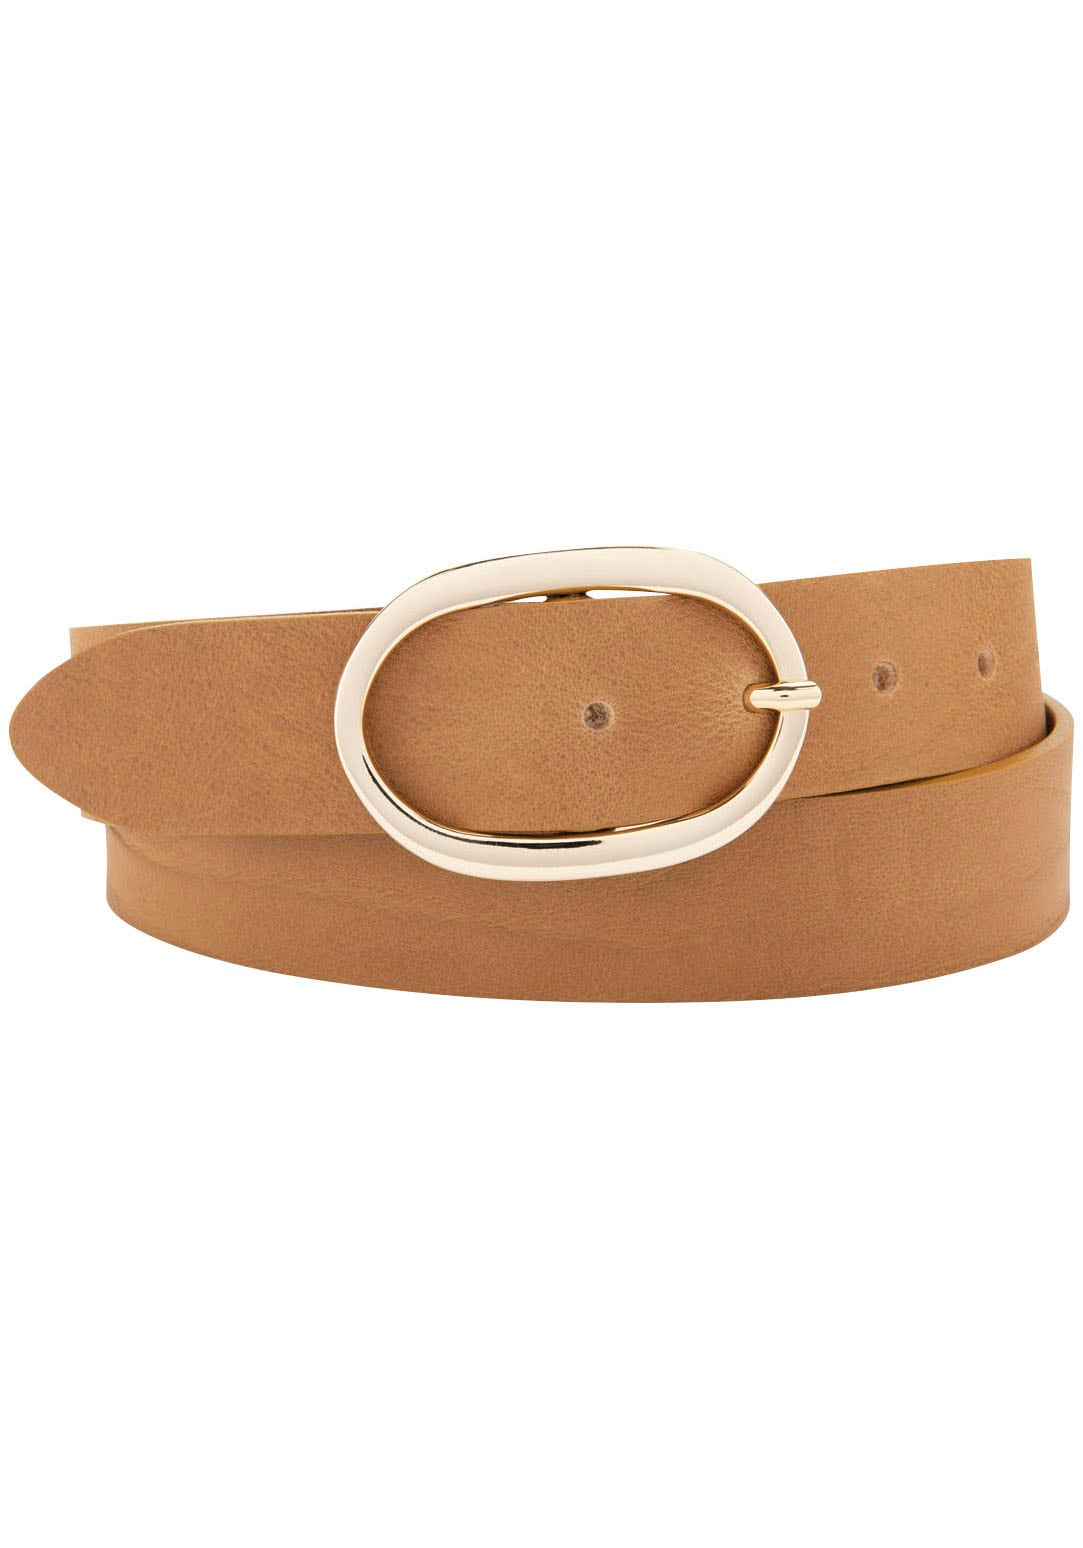 | GÖTZ kaufen aus Vollrind online eleganter Ledergürtel, goldener Ledergürtel Ovalschließe mit UNIVERSAL BERND